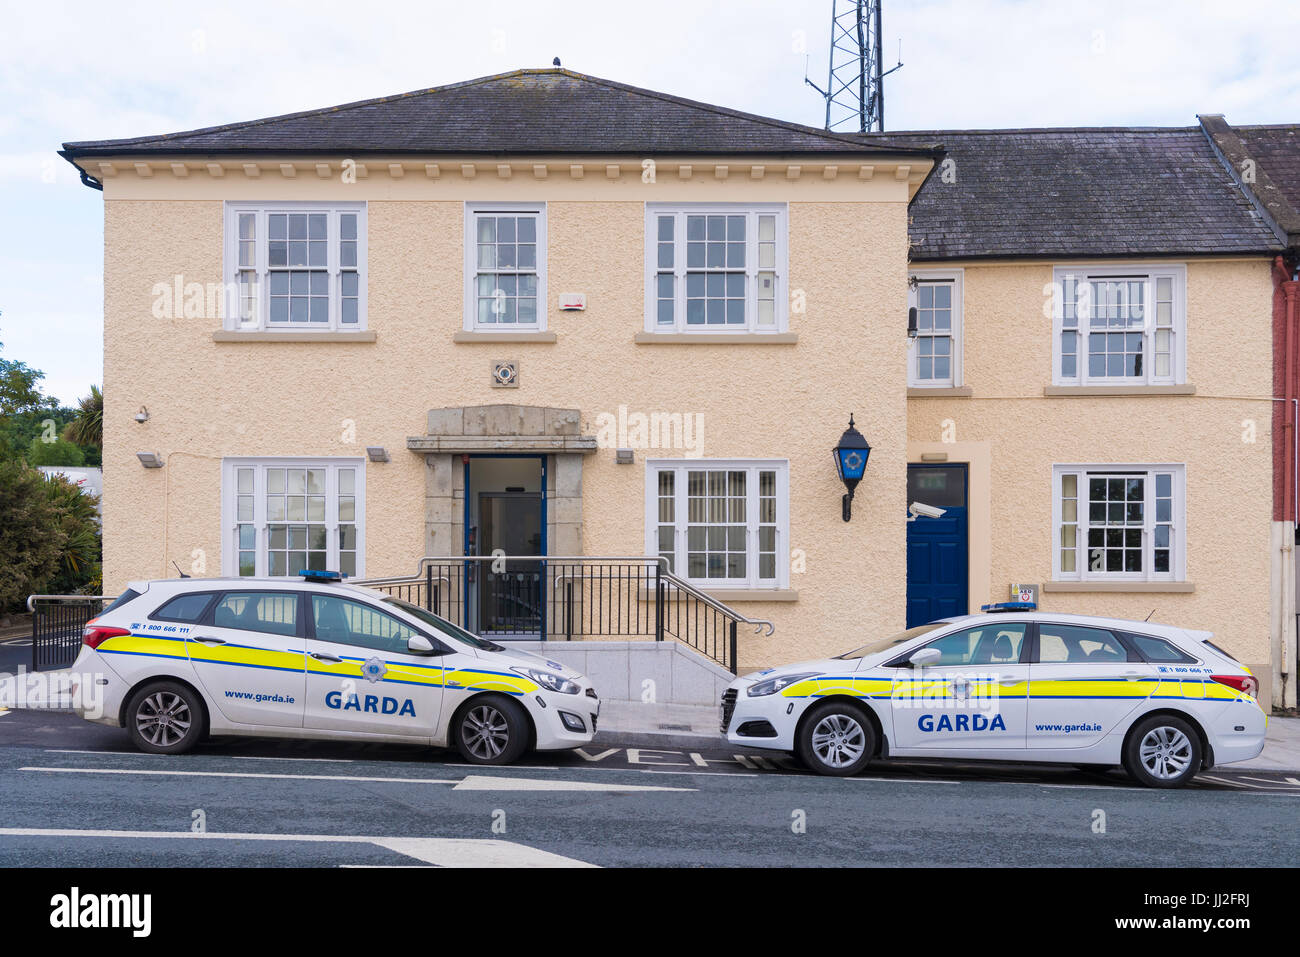 Two liveried patrol cars parked outside a Garda Siochana Irish police station. Stock Photo